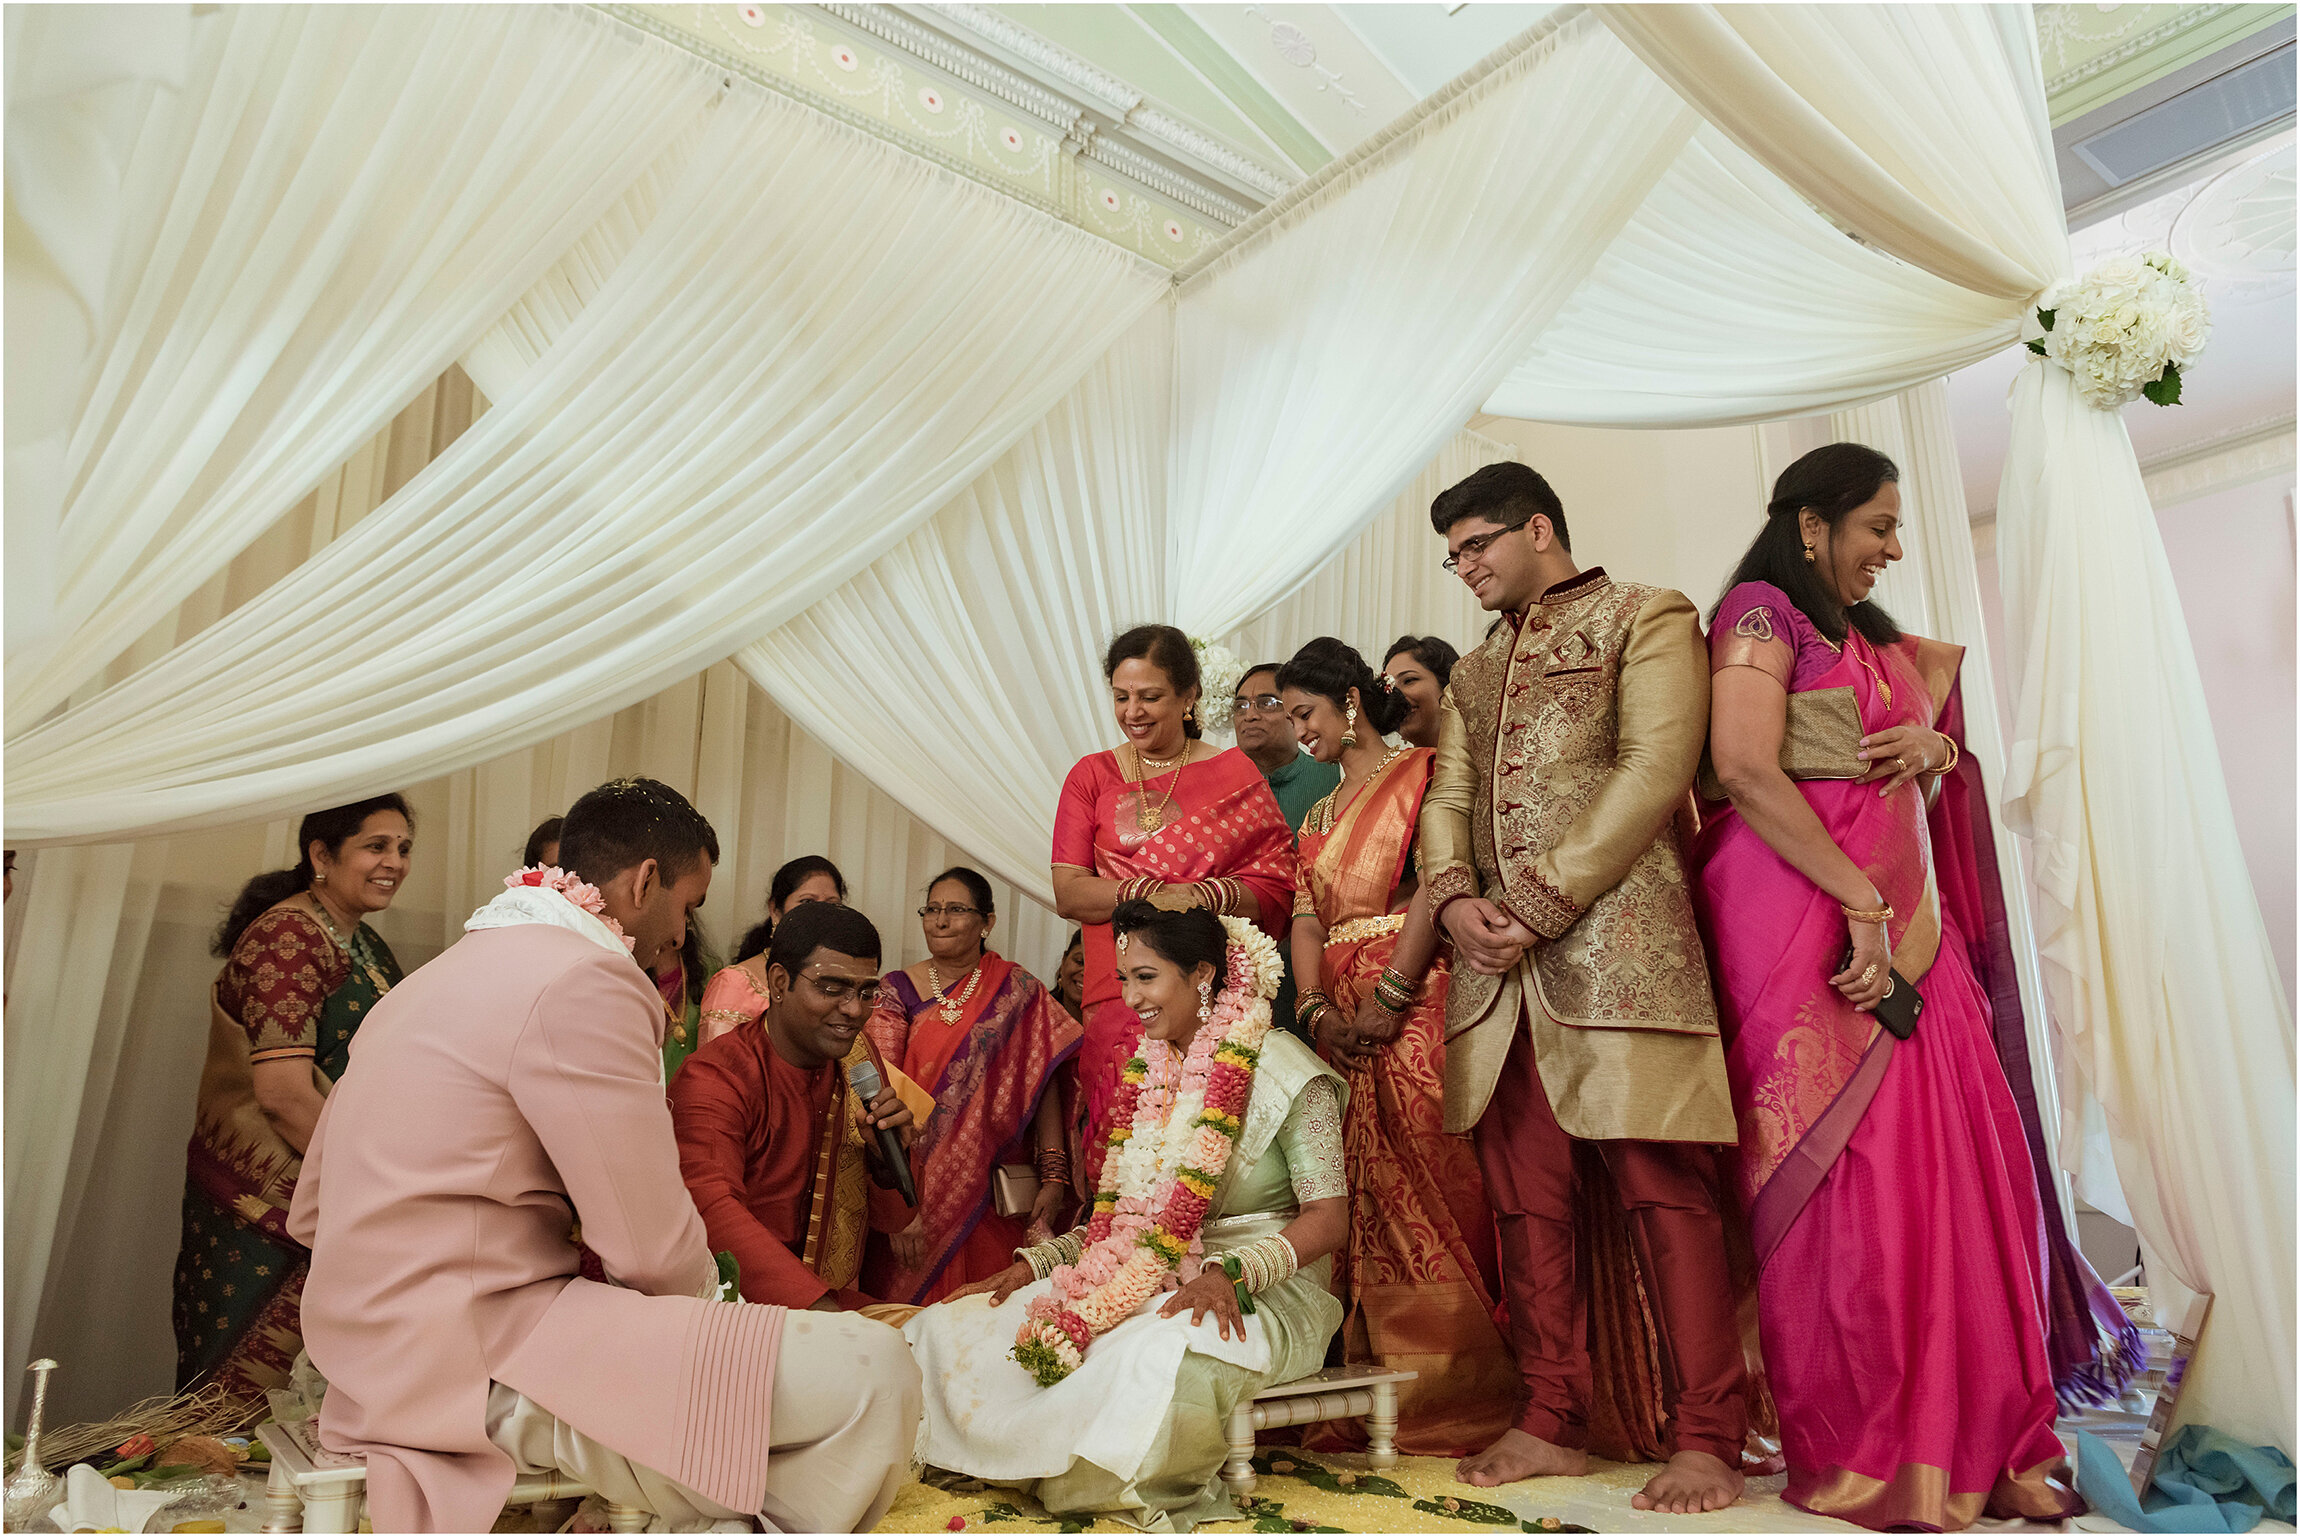 ©FianderFoto_Hindu Wedding_Bermuda_078.jpg